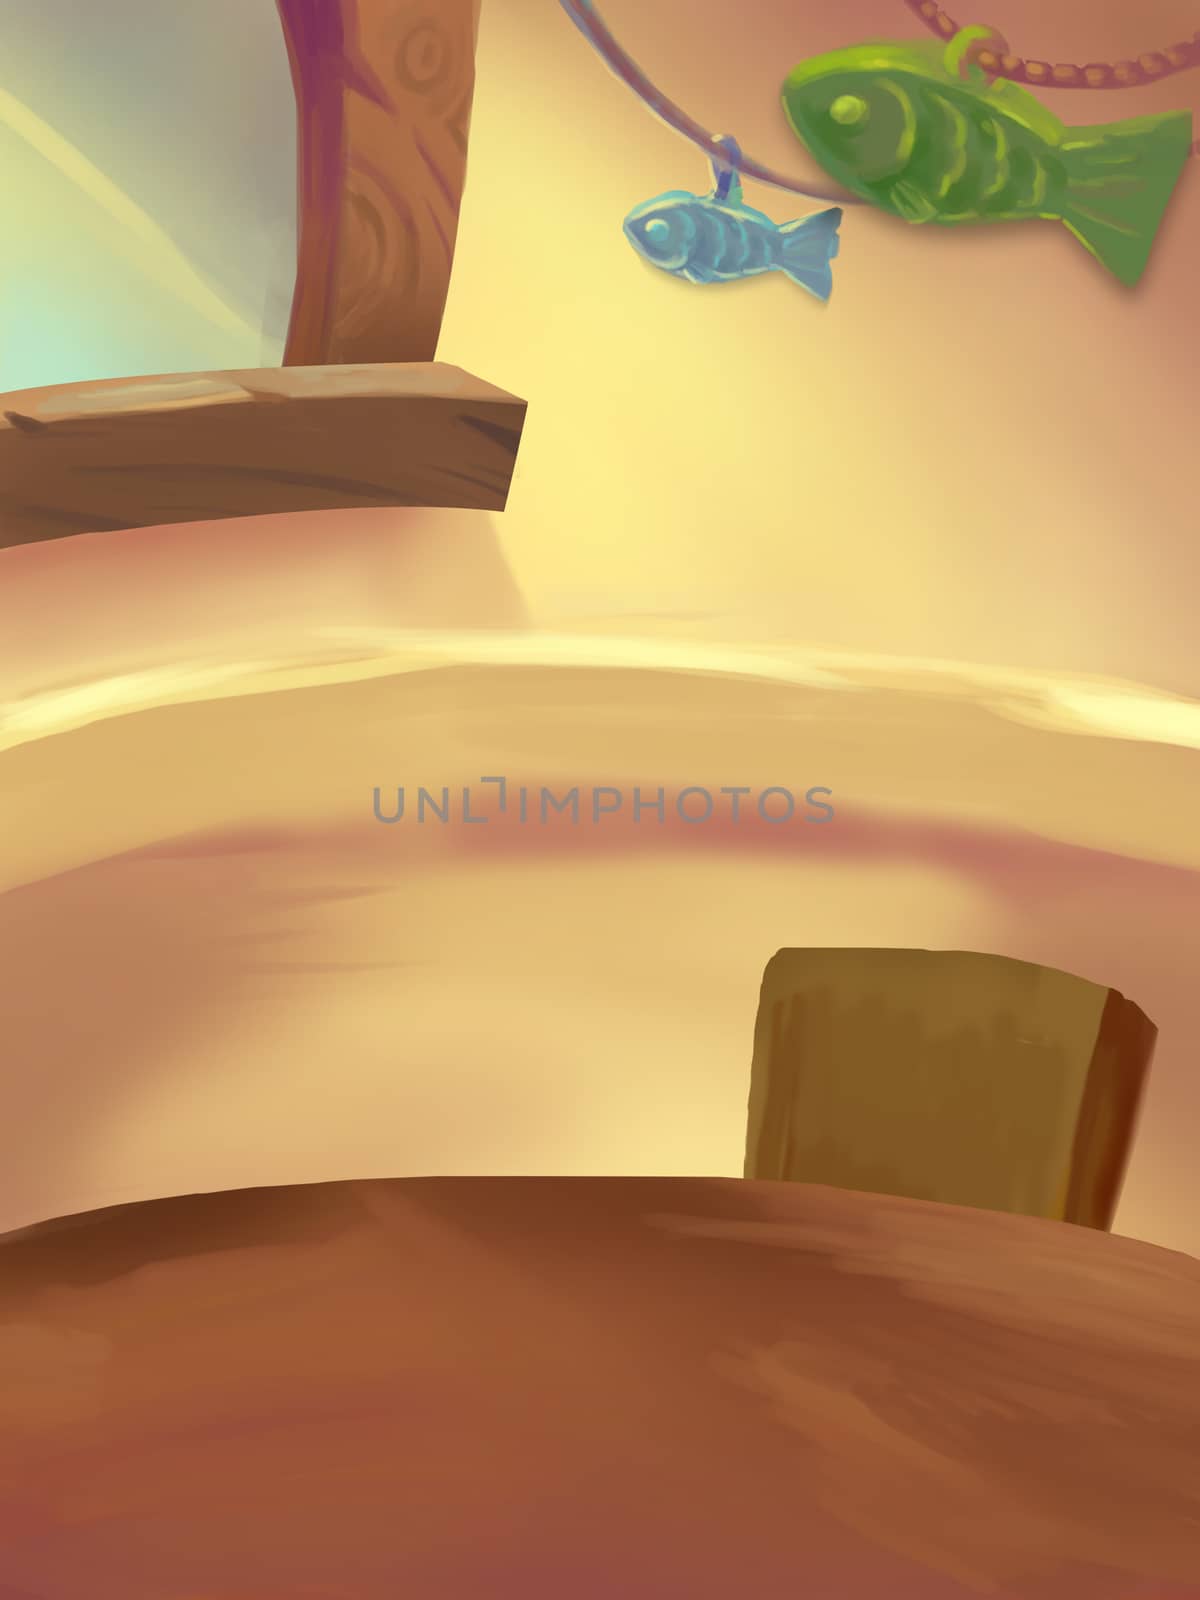 Illustration: Sweet Dinner Room; Tabel with food. Drumstick. Ice cream. Fantastic Cartoon Style Scene Wallpaper Background Design.